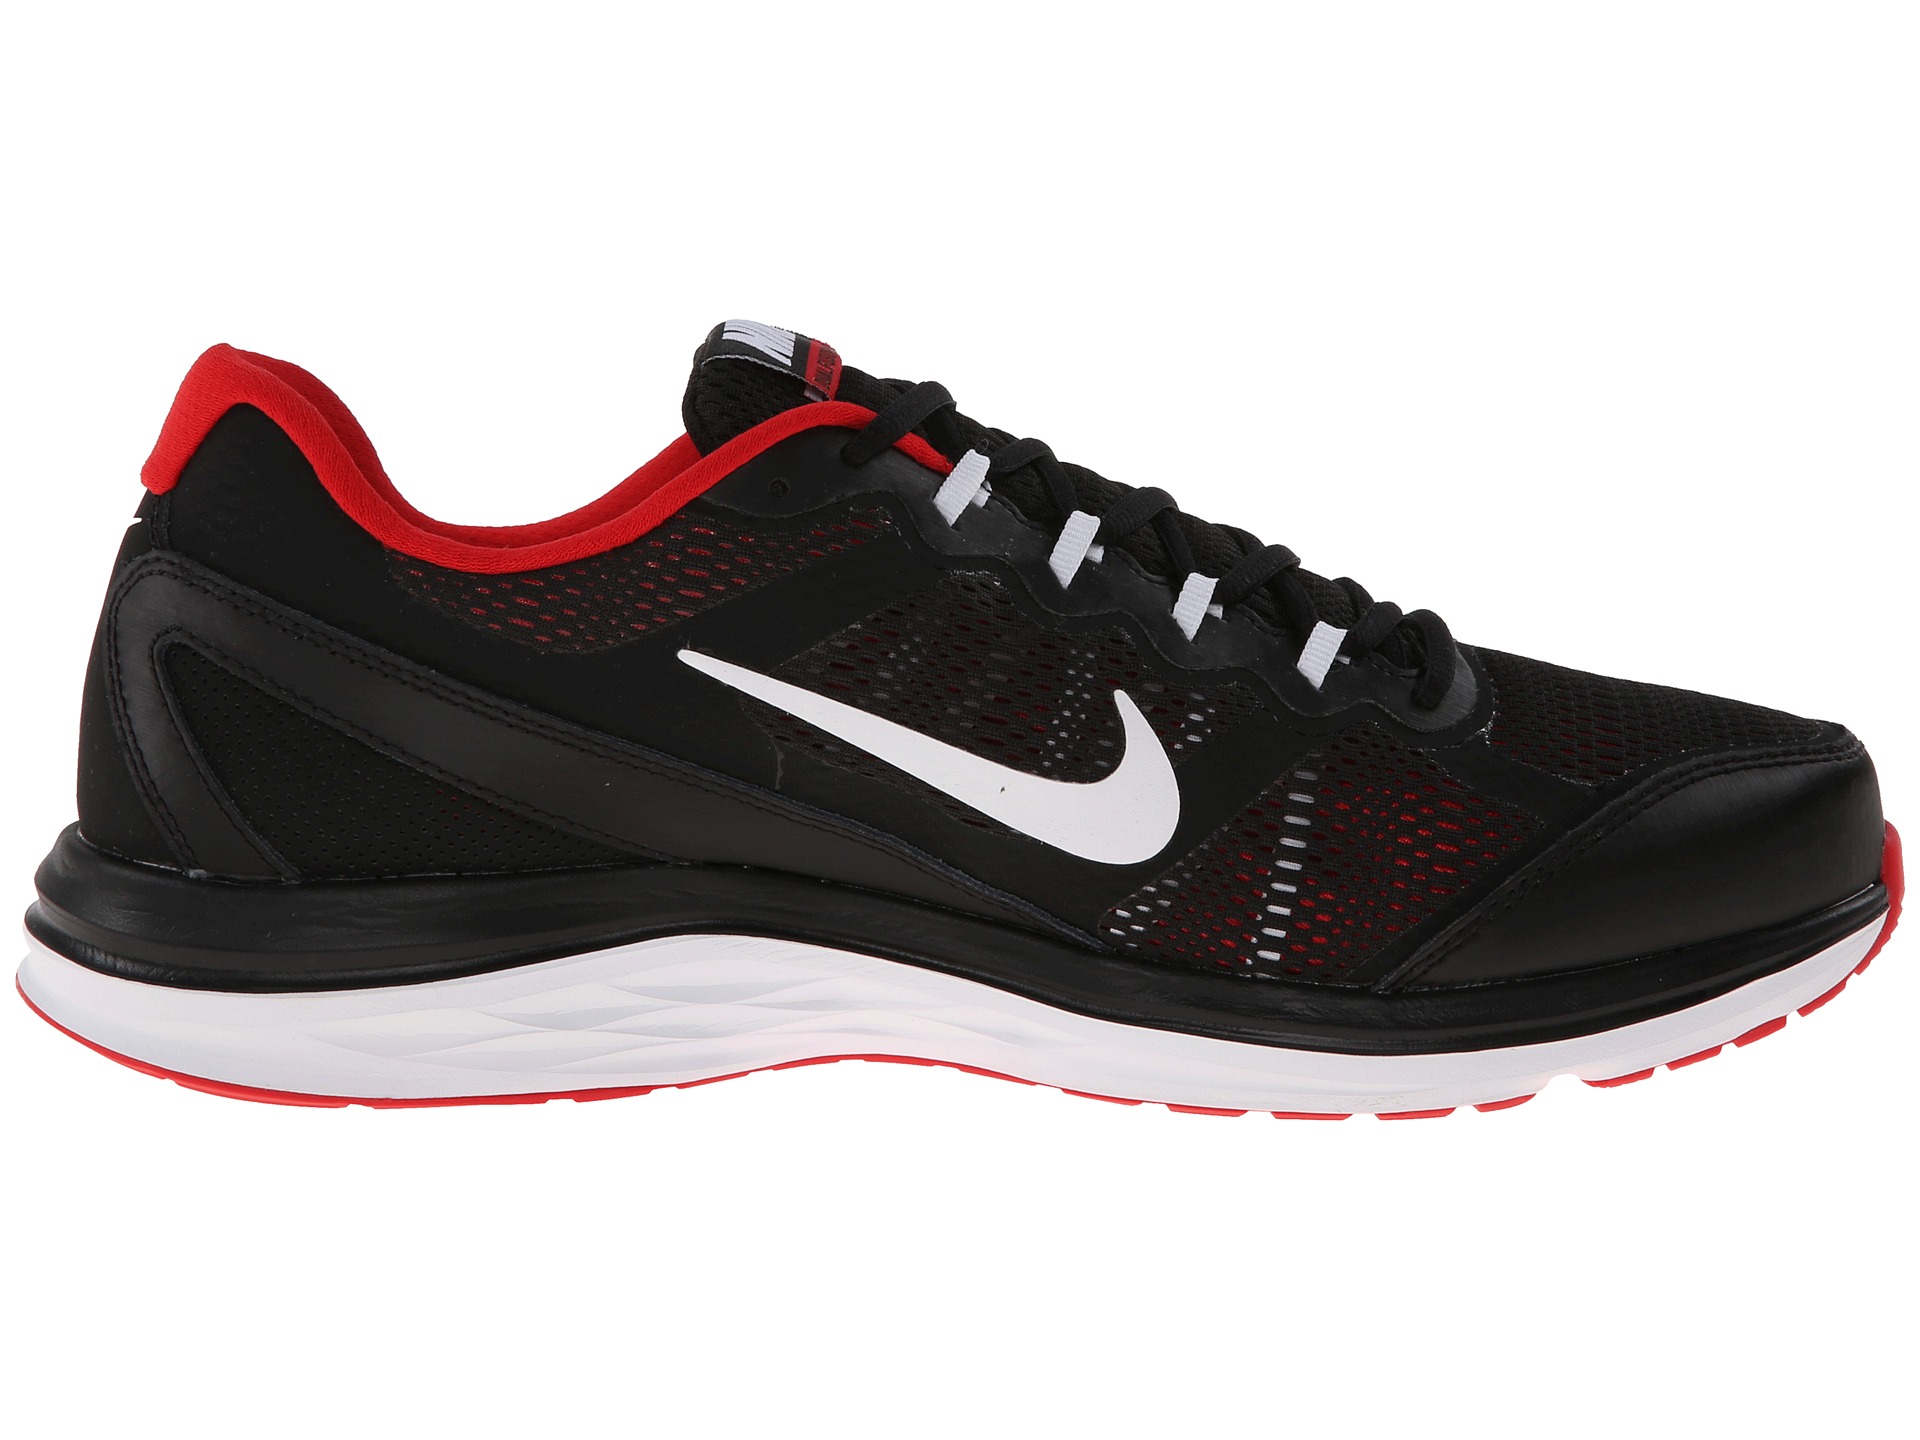 Nike Dual Fusion Run 3 Black/University Red/White - Zappos.com Free ...